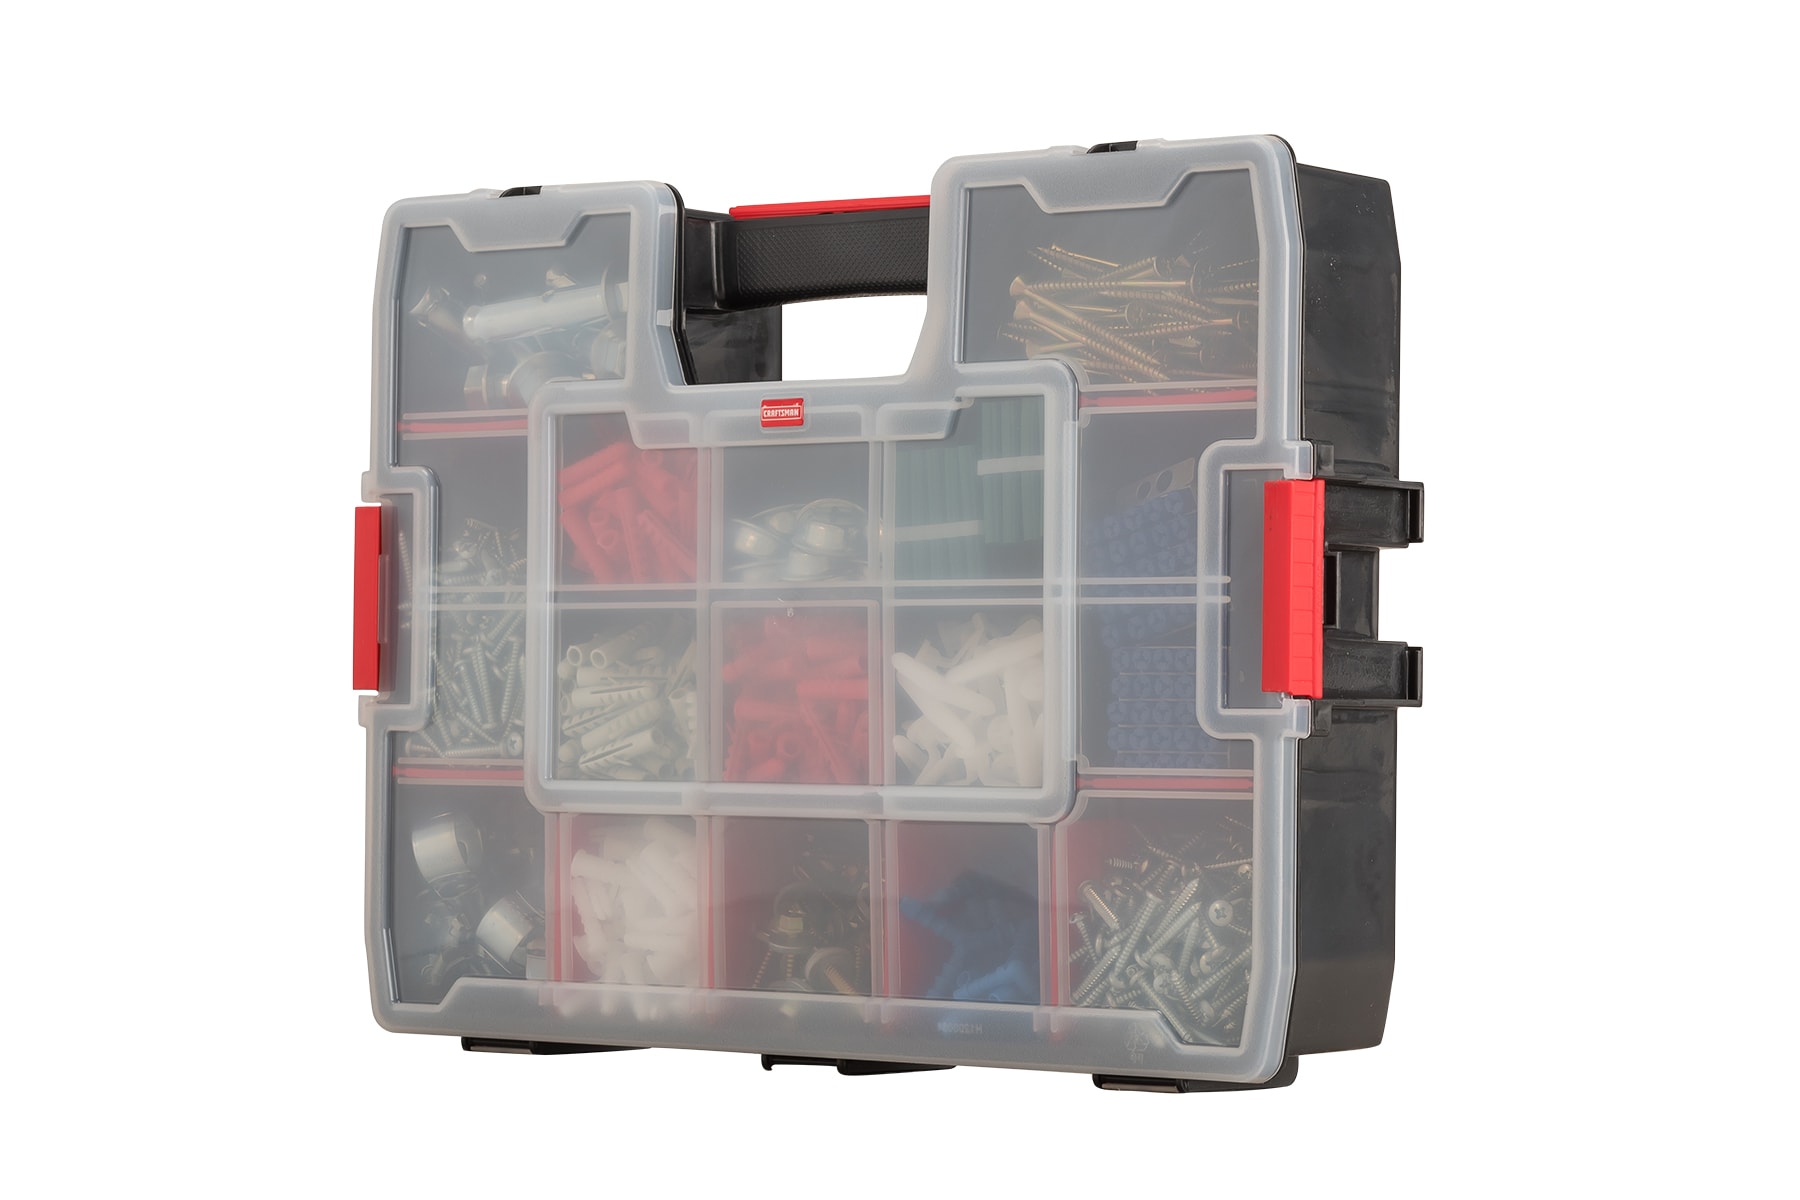 15-Compartment Interlocking Small Parts Organizer Shelf Rails by